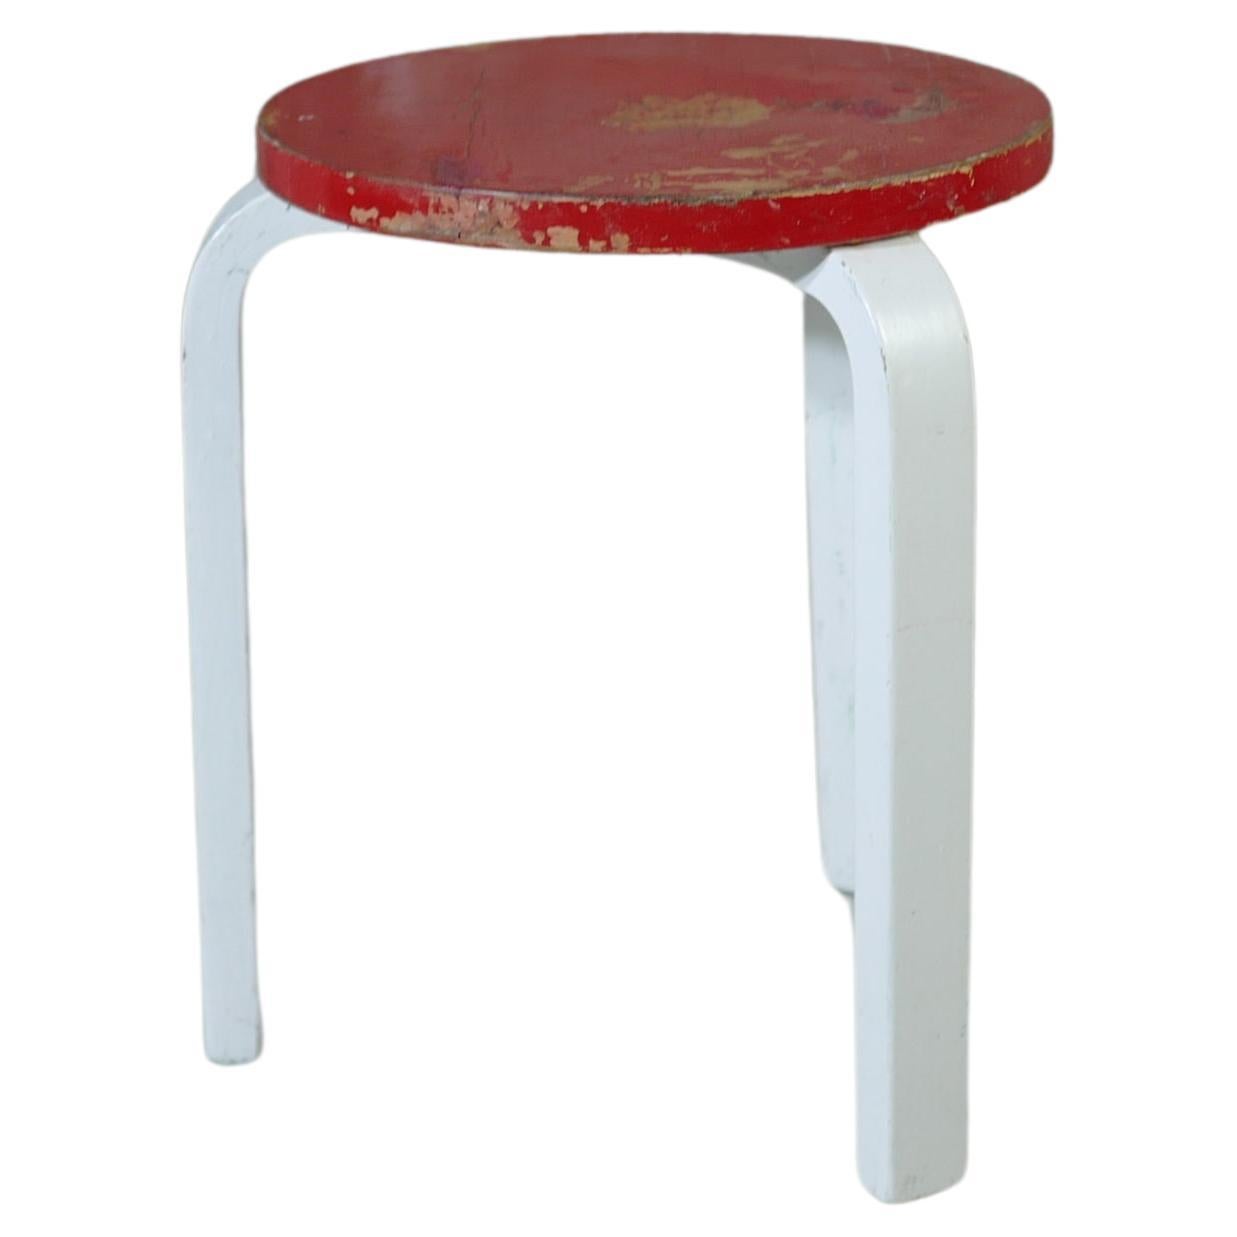 alvar aalto stool60 painted red 1930's